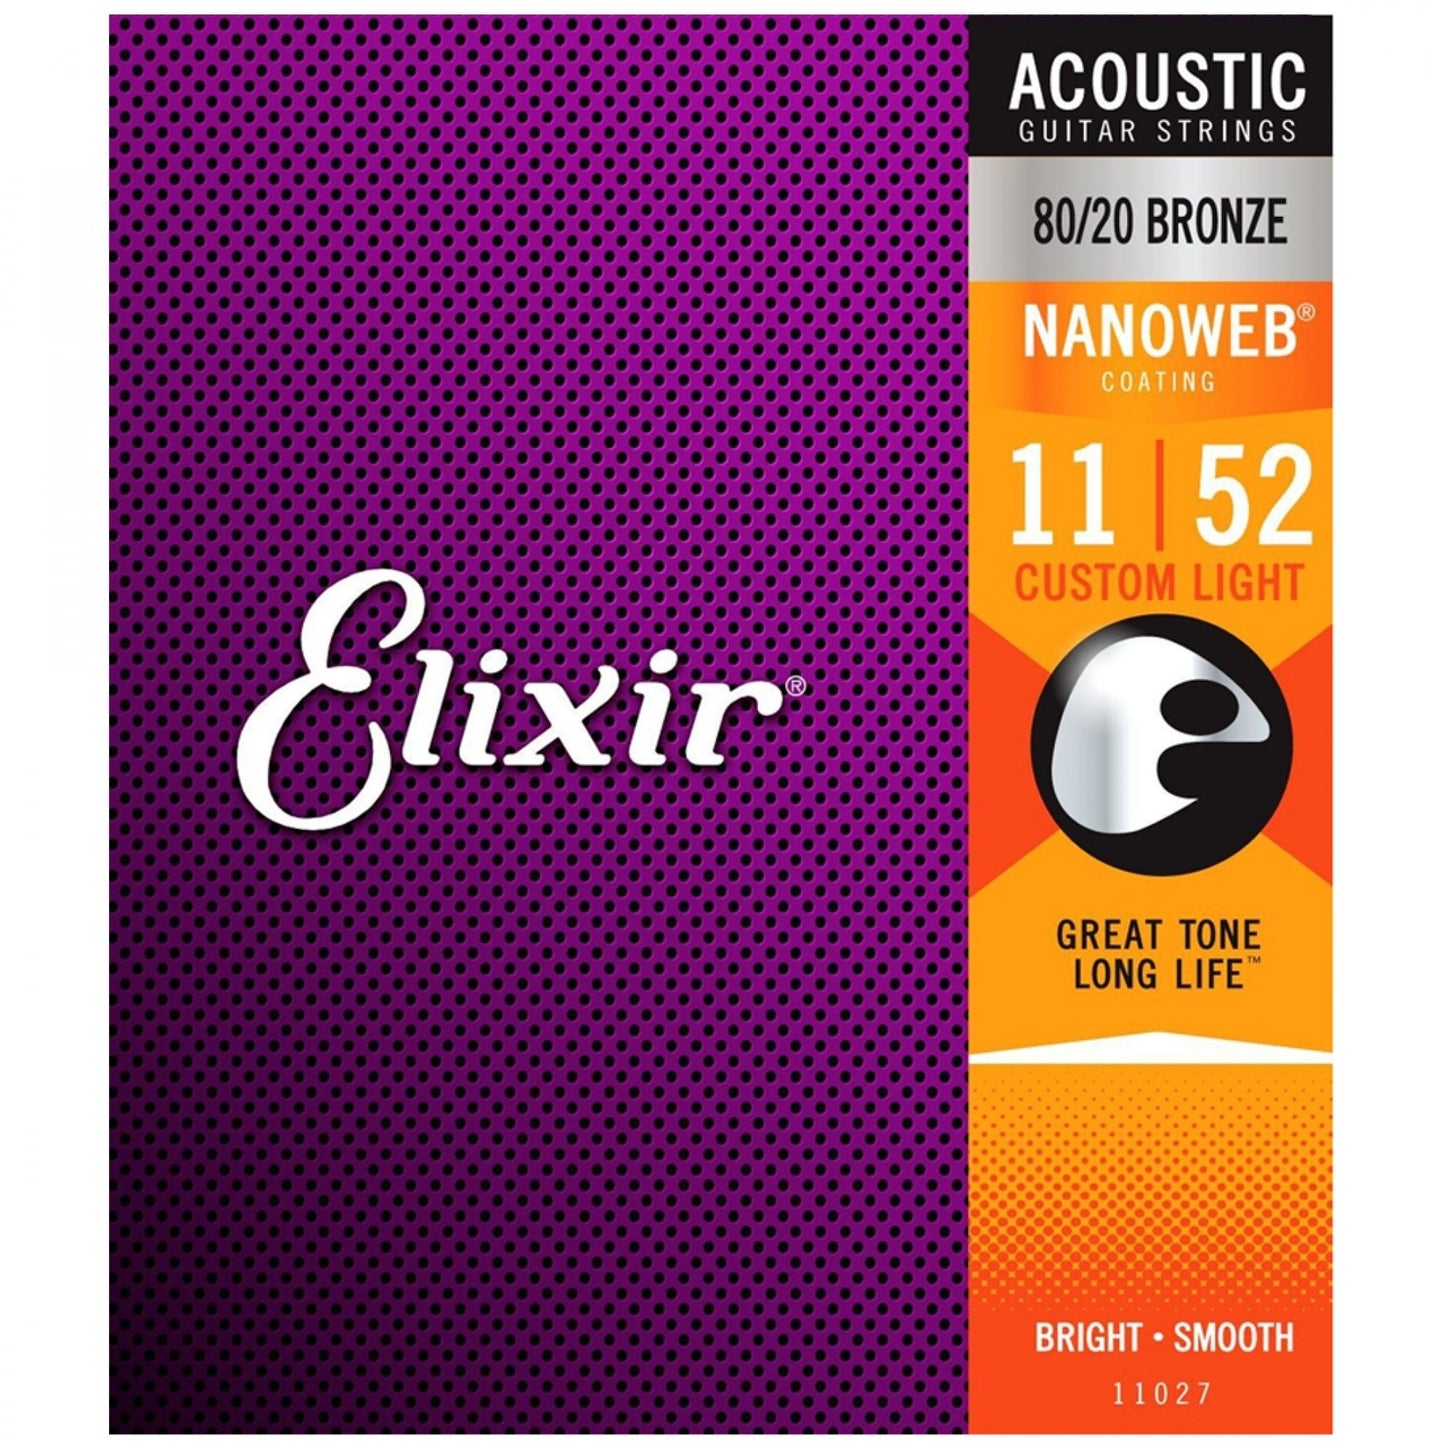 Elixir Acoustic NW 80/20 11-52 CL